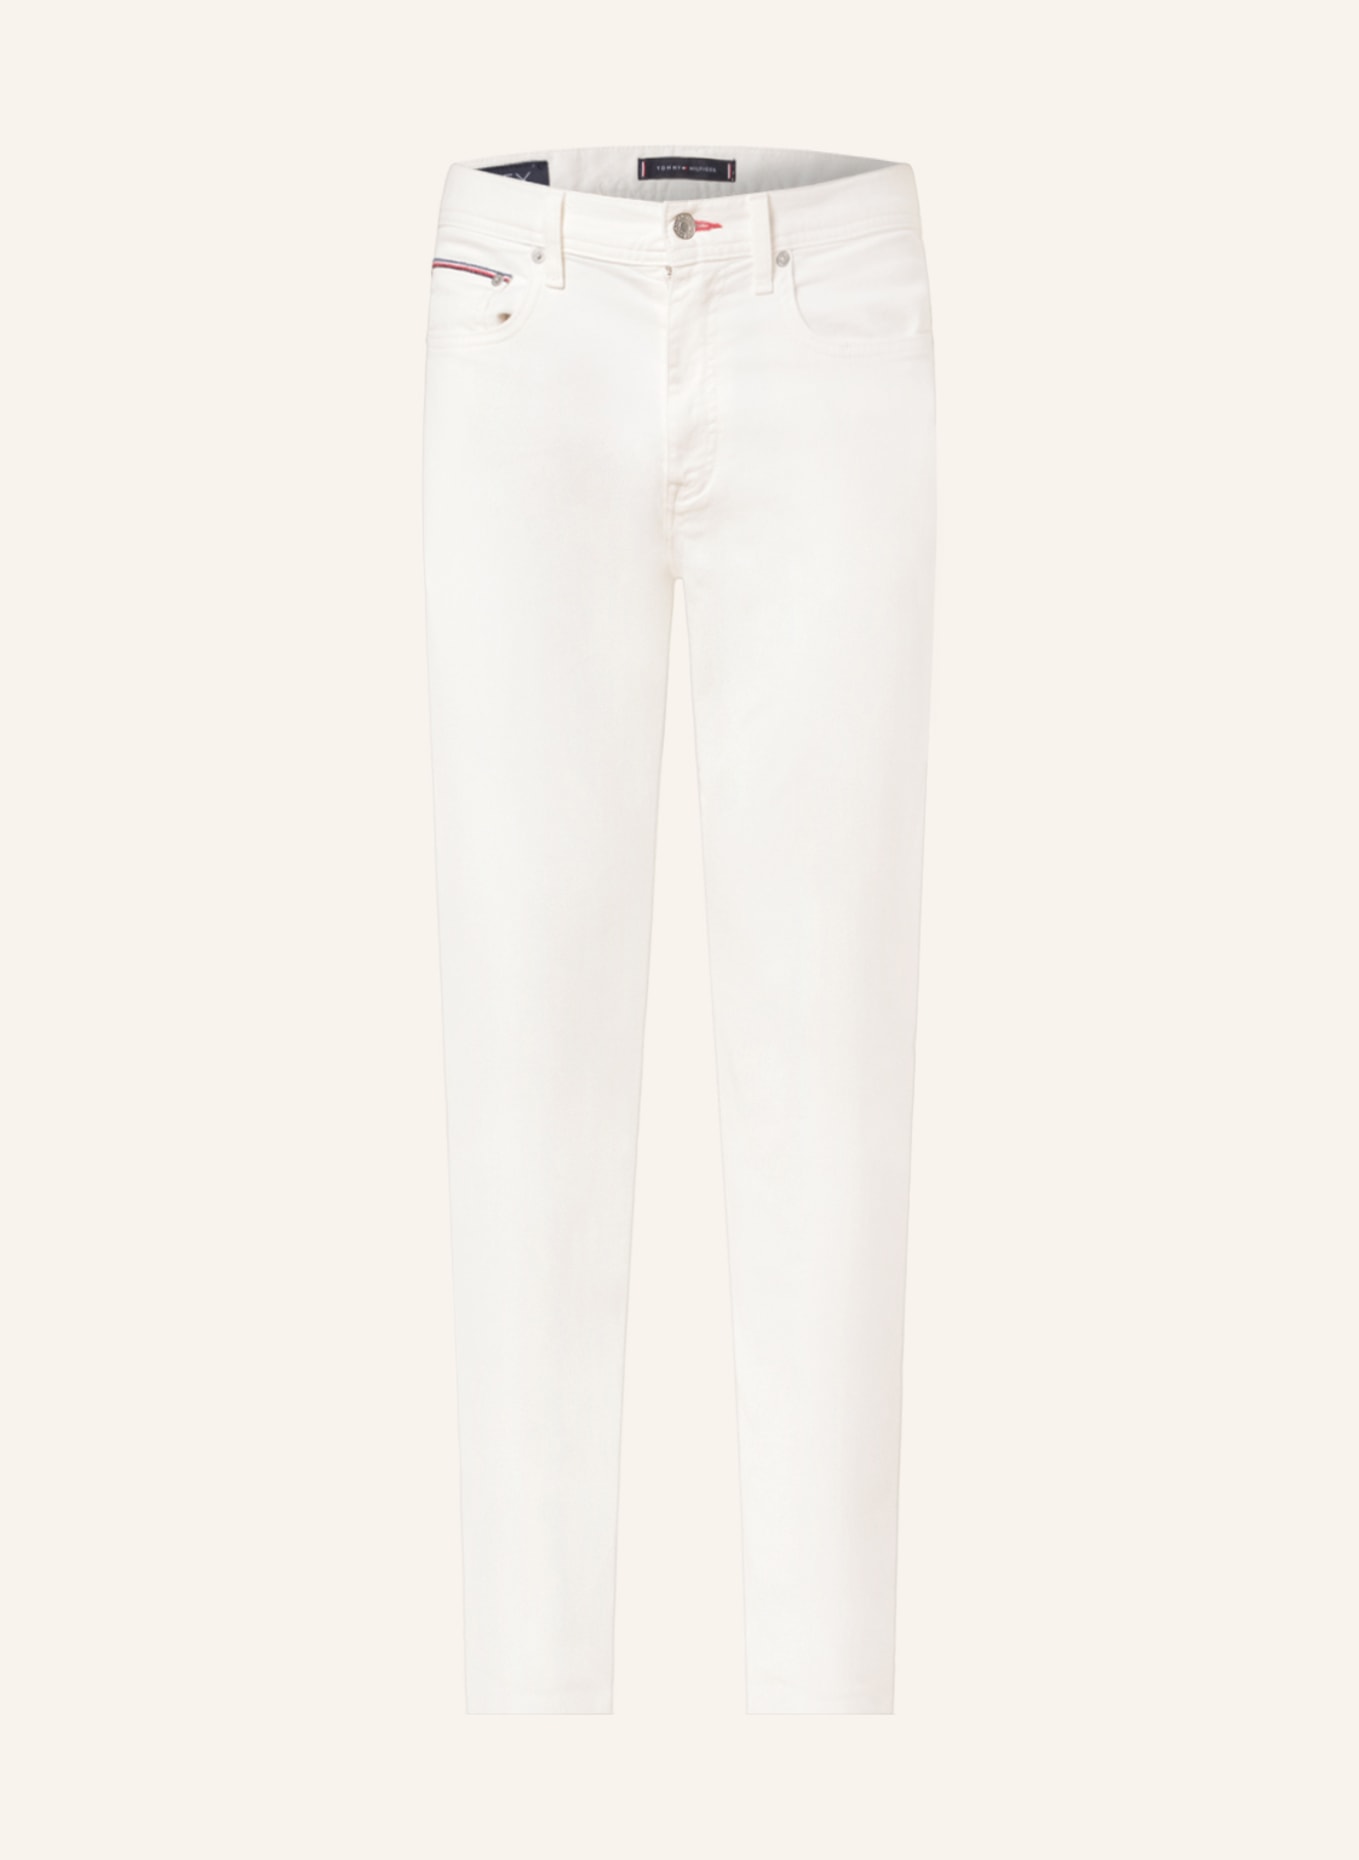 TOMMY HILFIGER Jeans HOUSTON Slim Taper Fit, Farbe: 1CD Gale White (Bild 1)